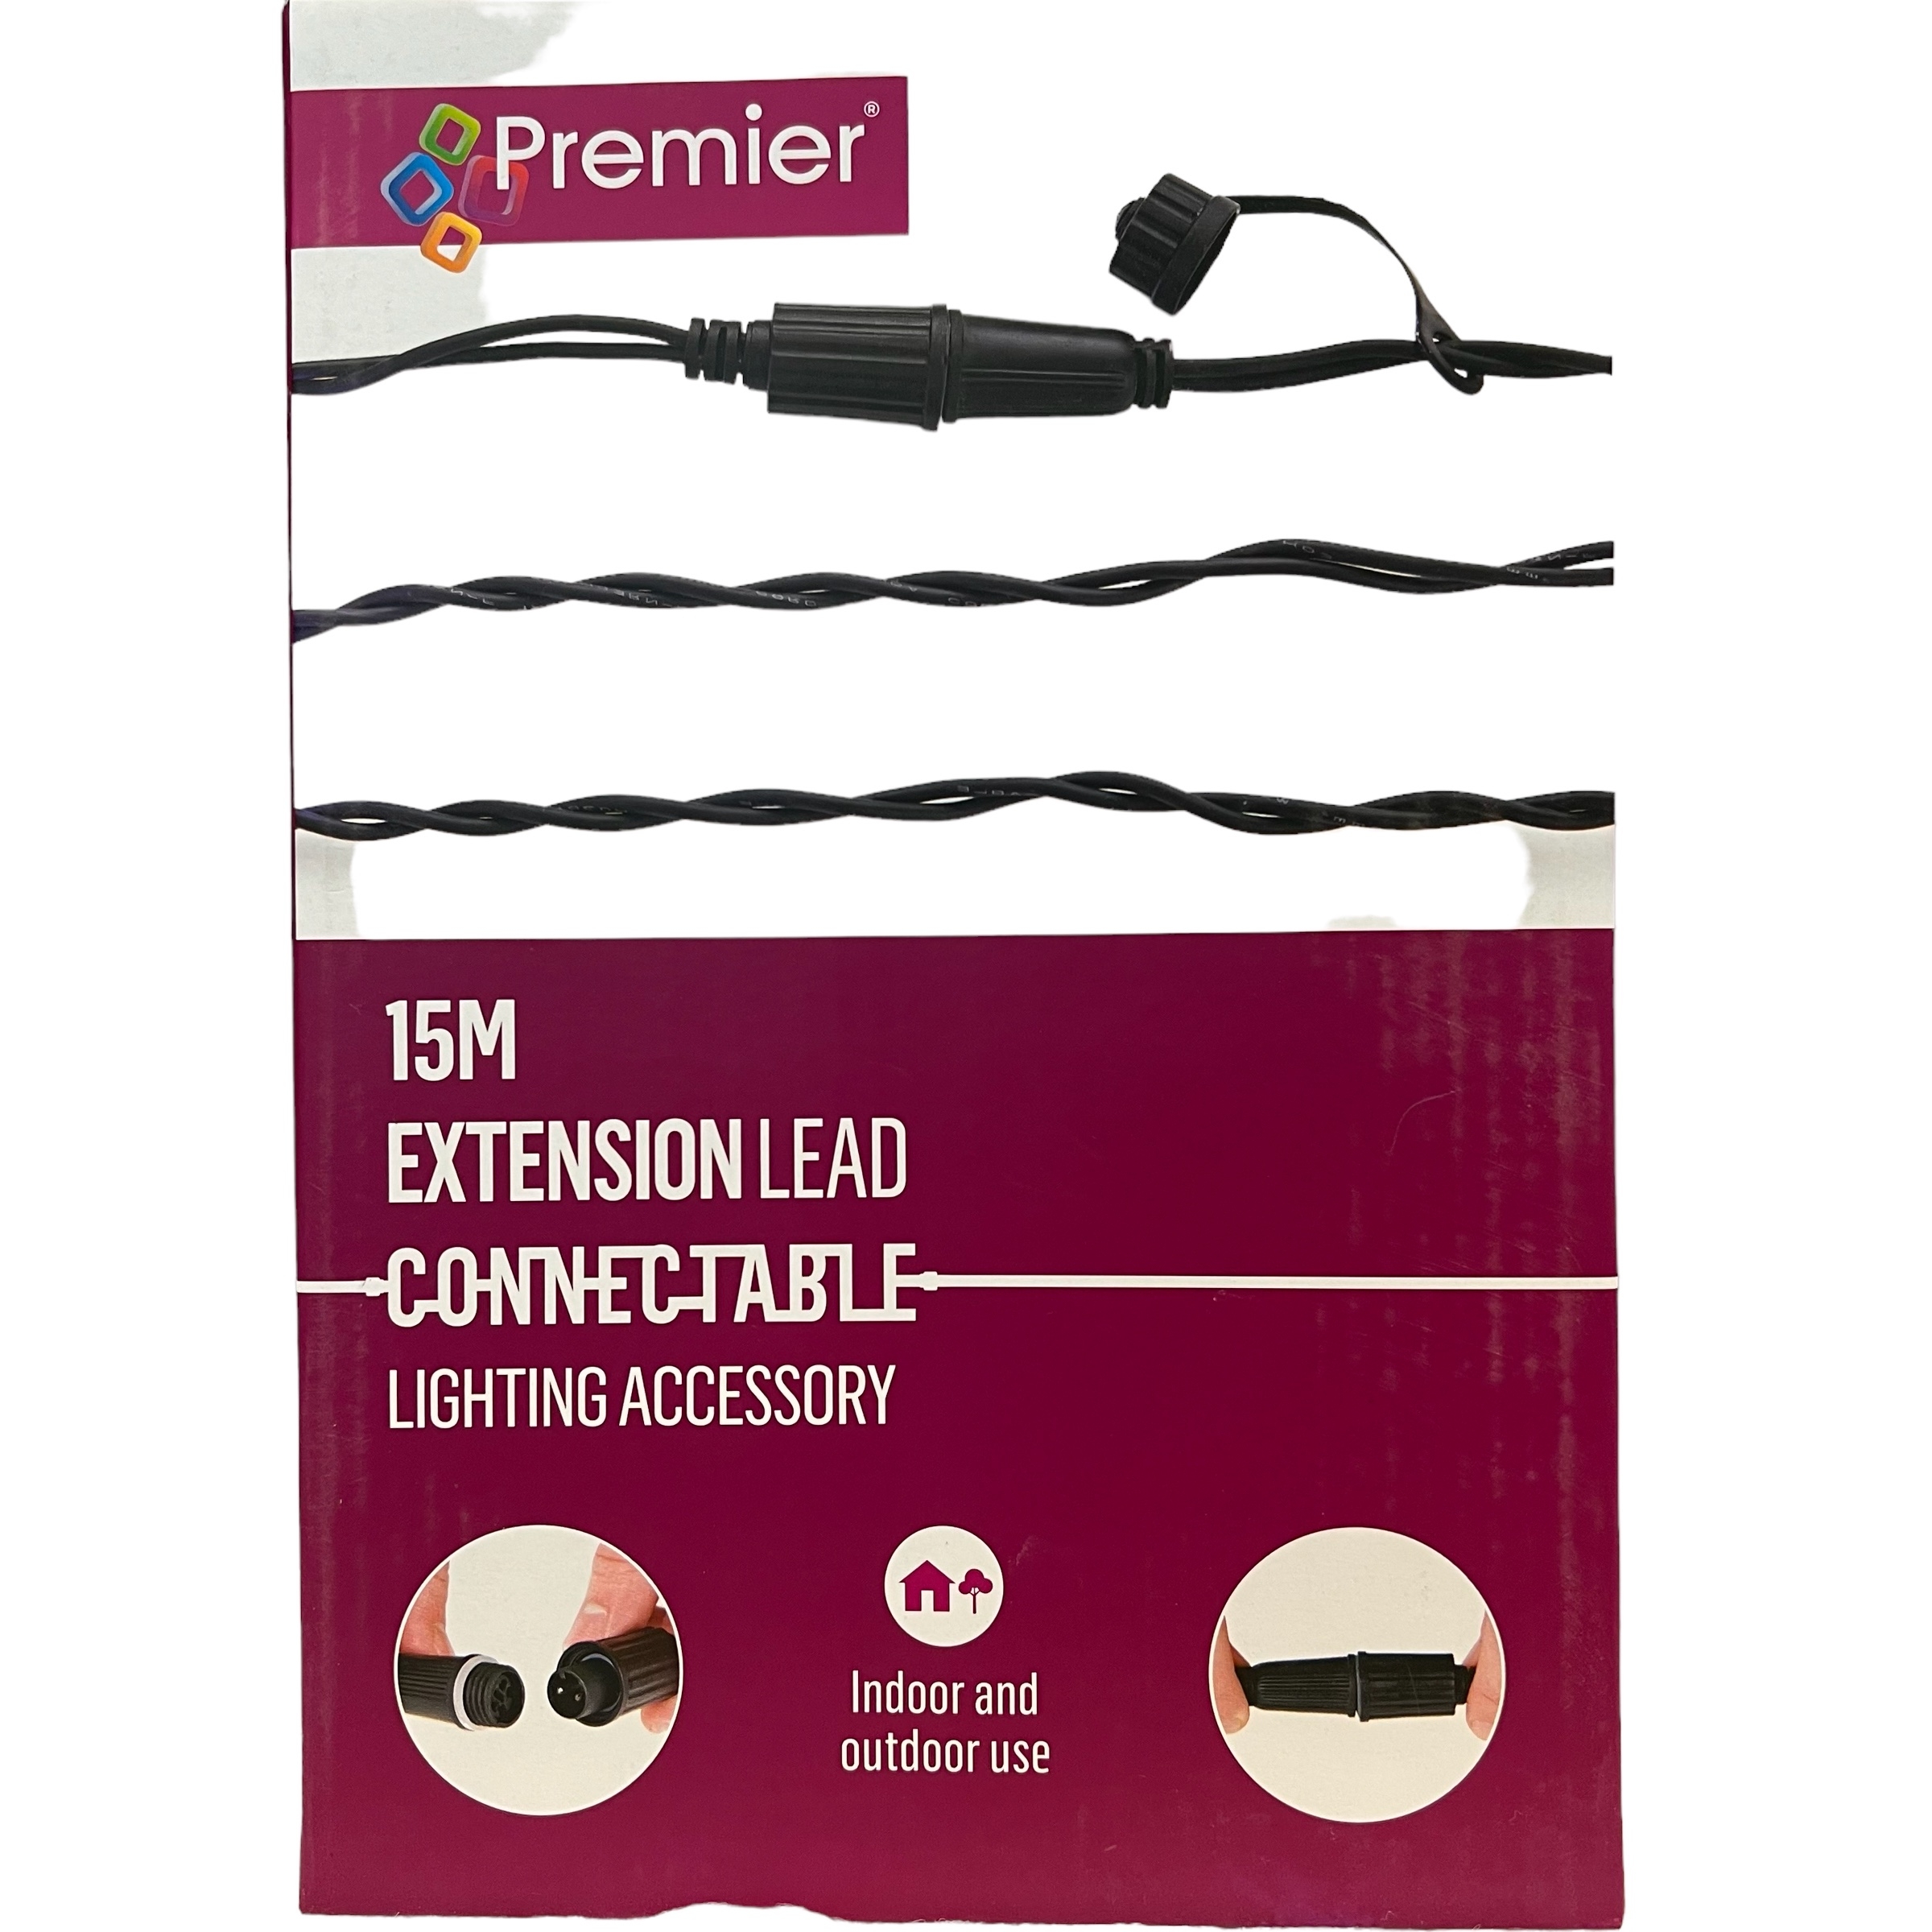 Premier 15m Extension Lead For Connectable Lights